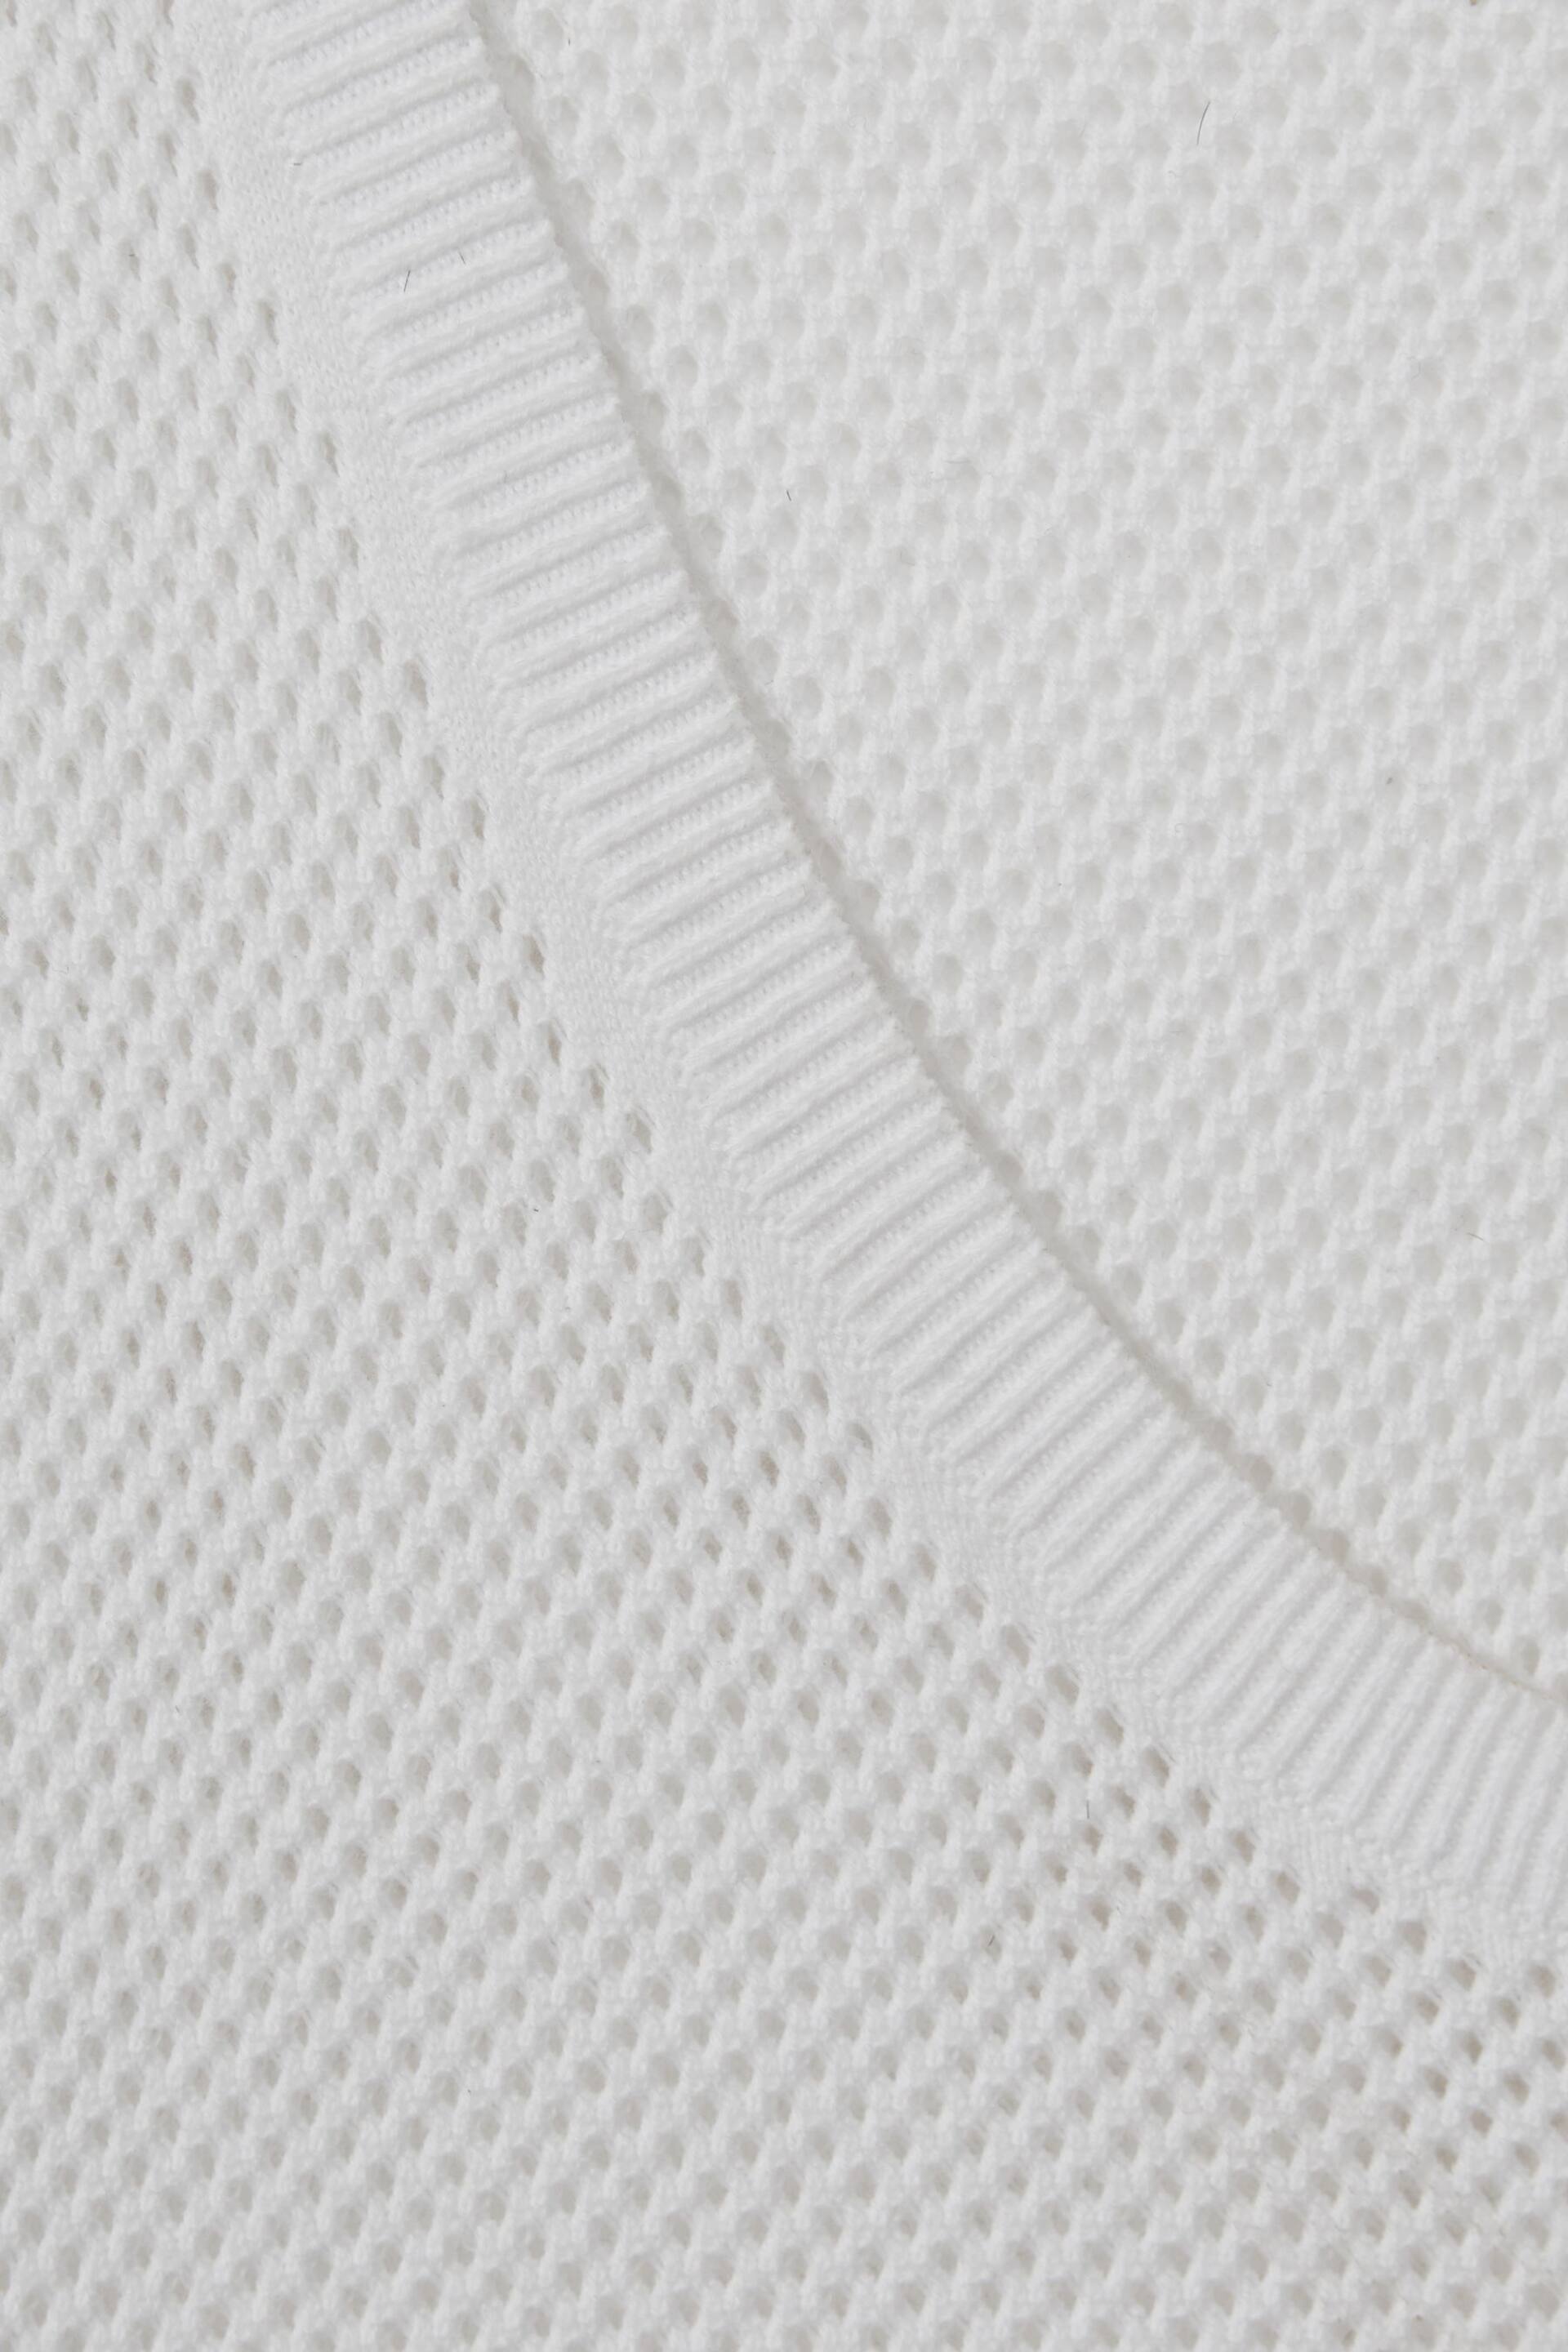 Reiss Optic White Velo Open-Stitch Cotton Vest - Image 6 of 6